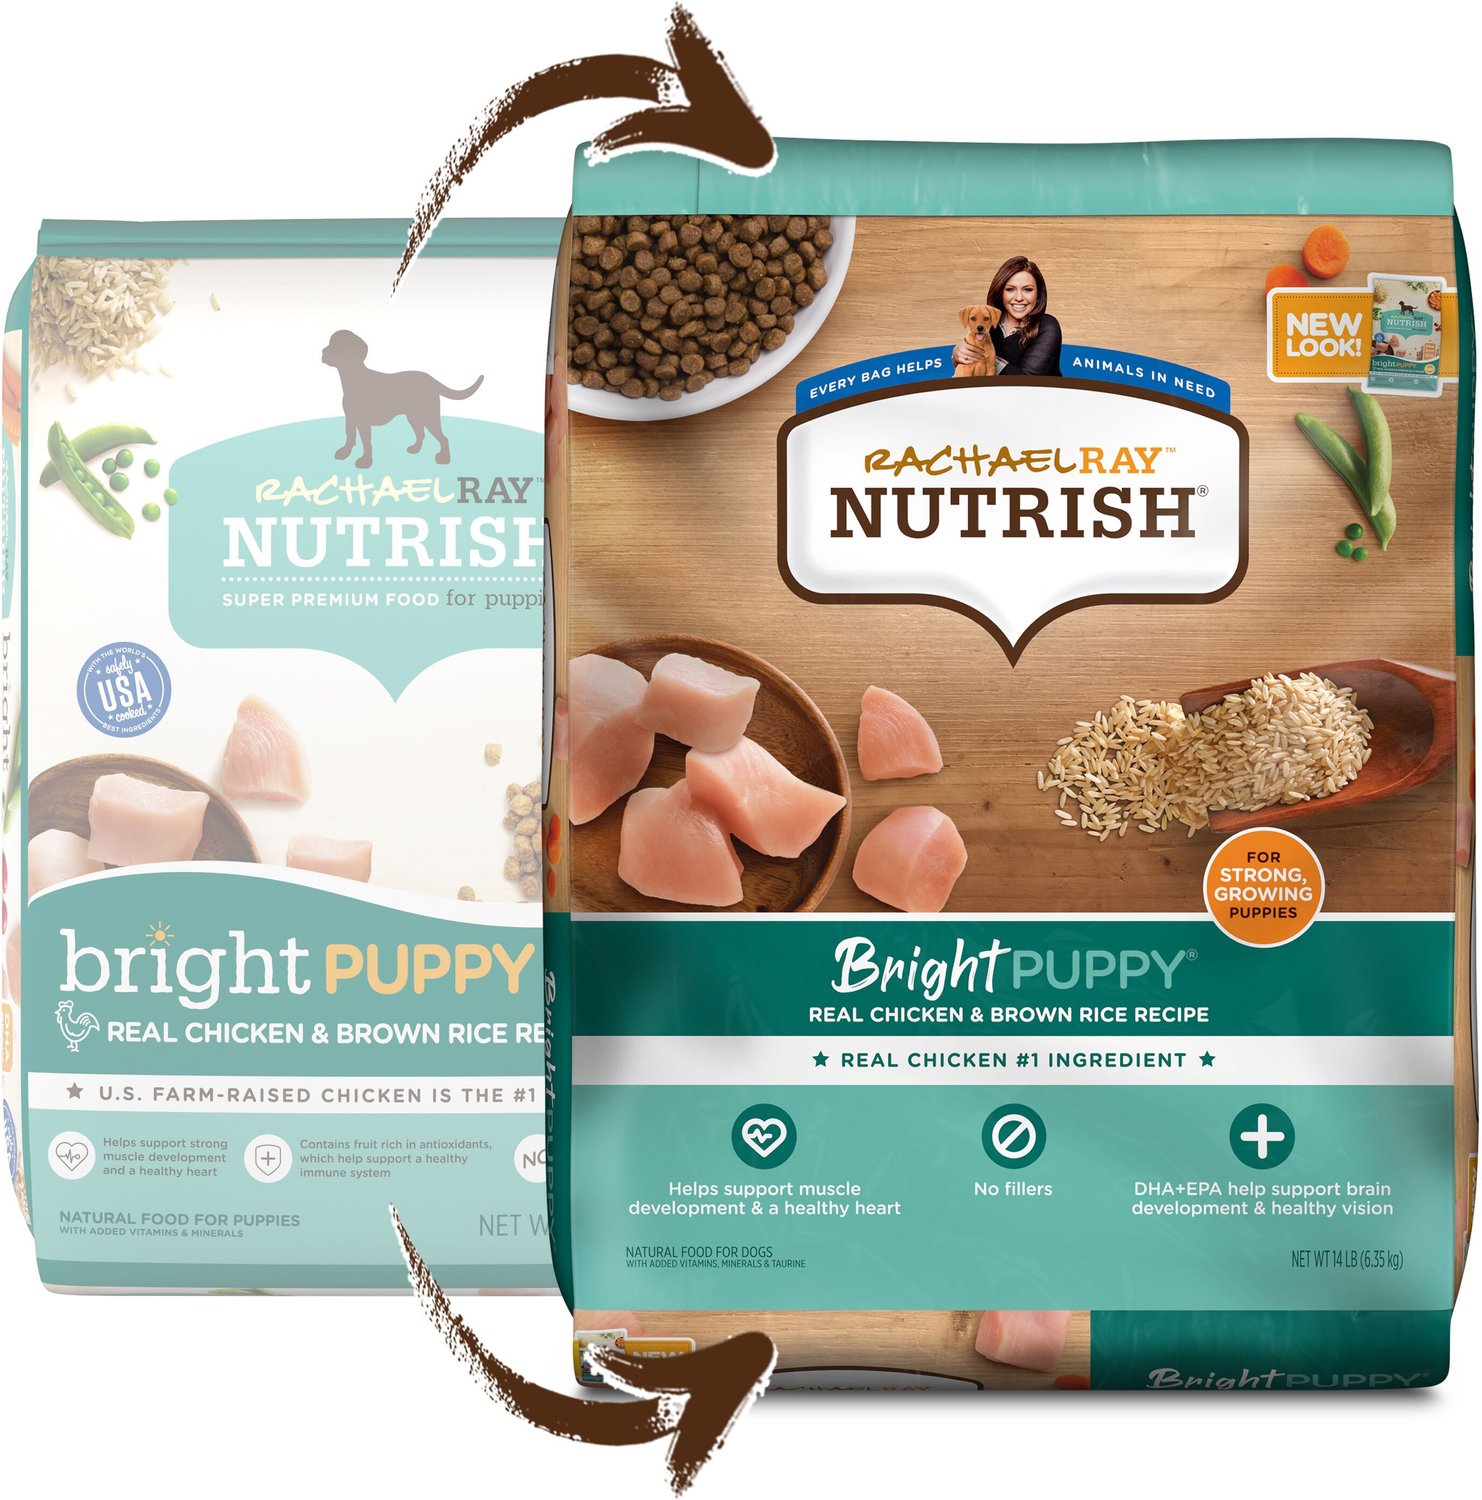 Rachael Ray Nutrish Dog Food Feeding Chart